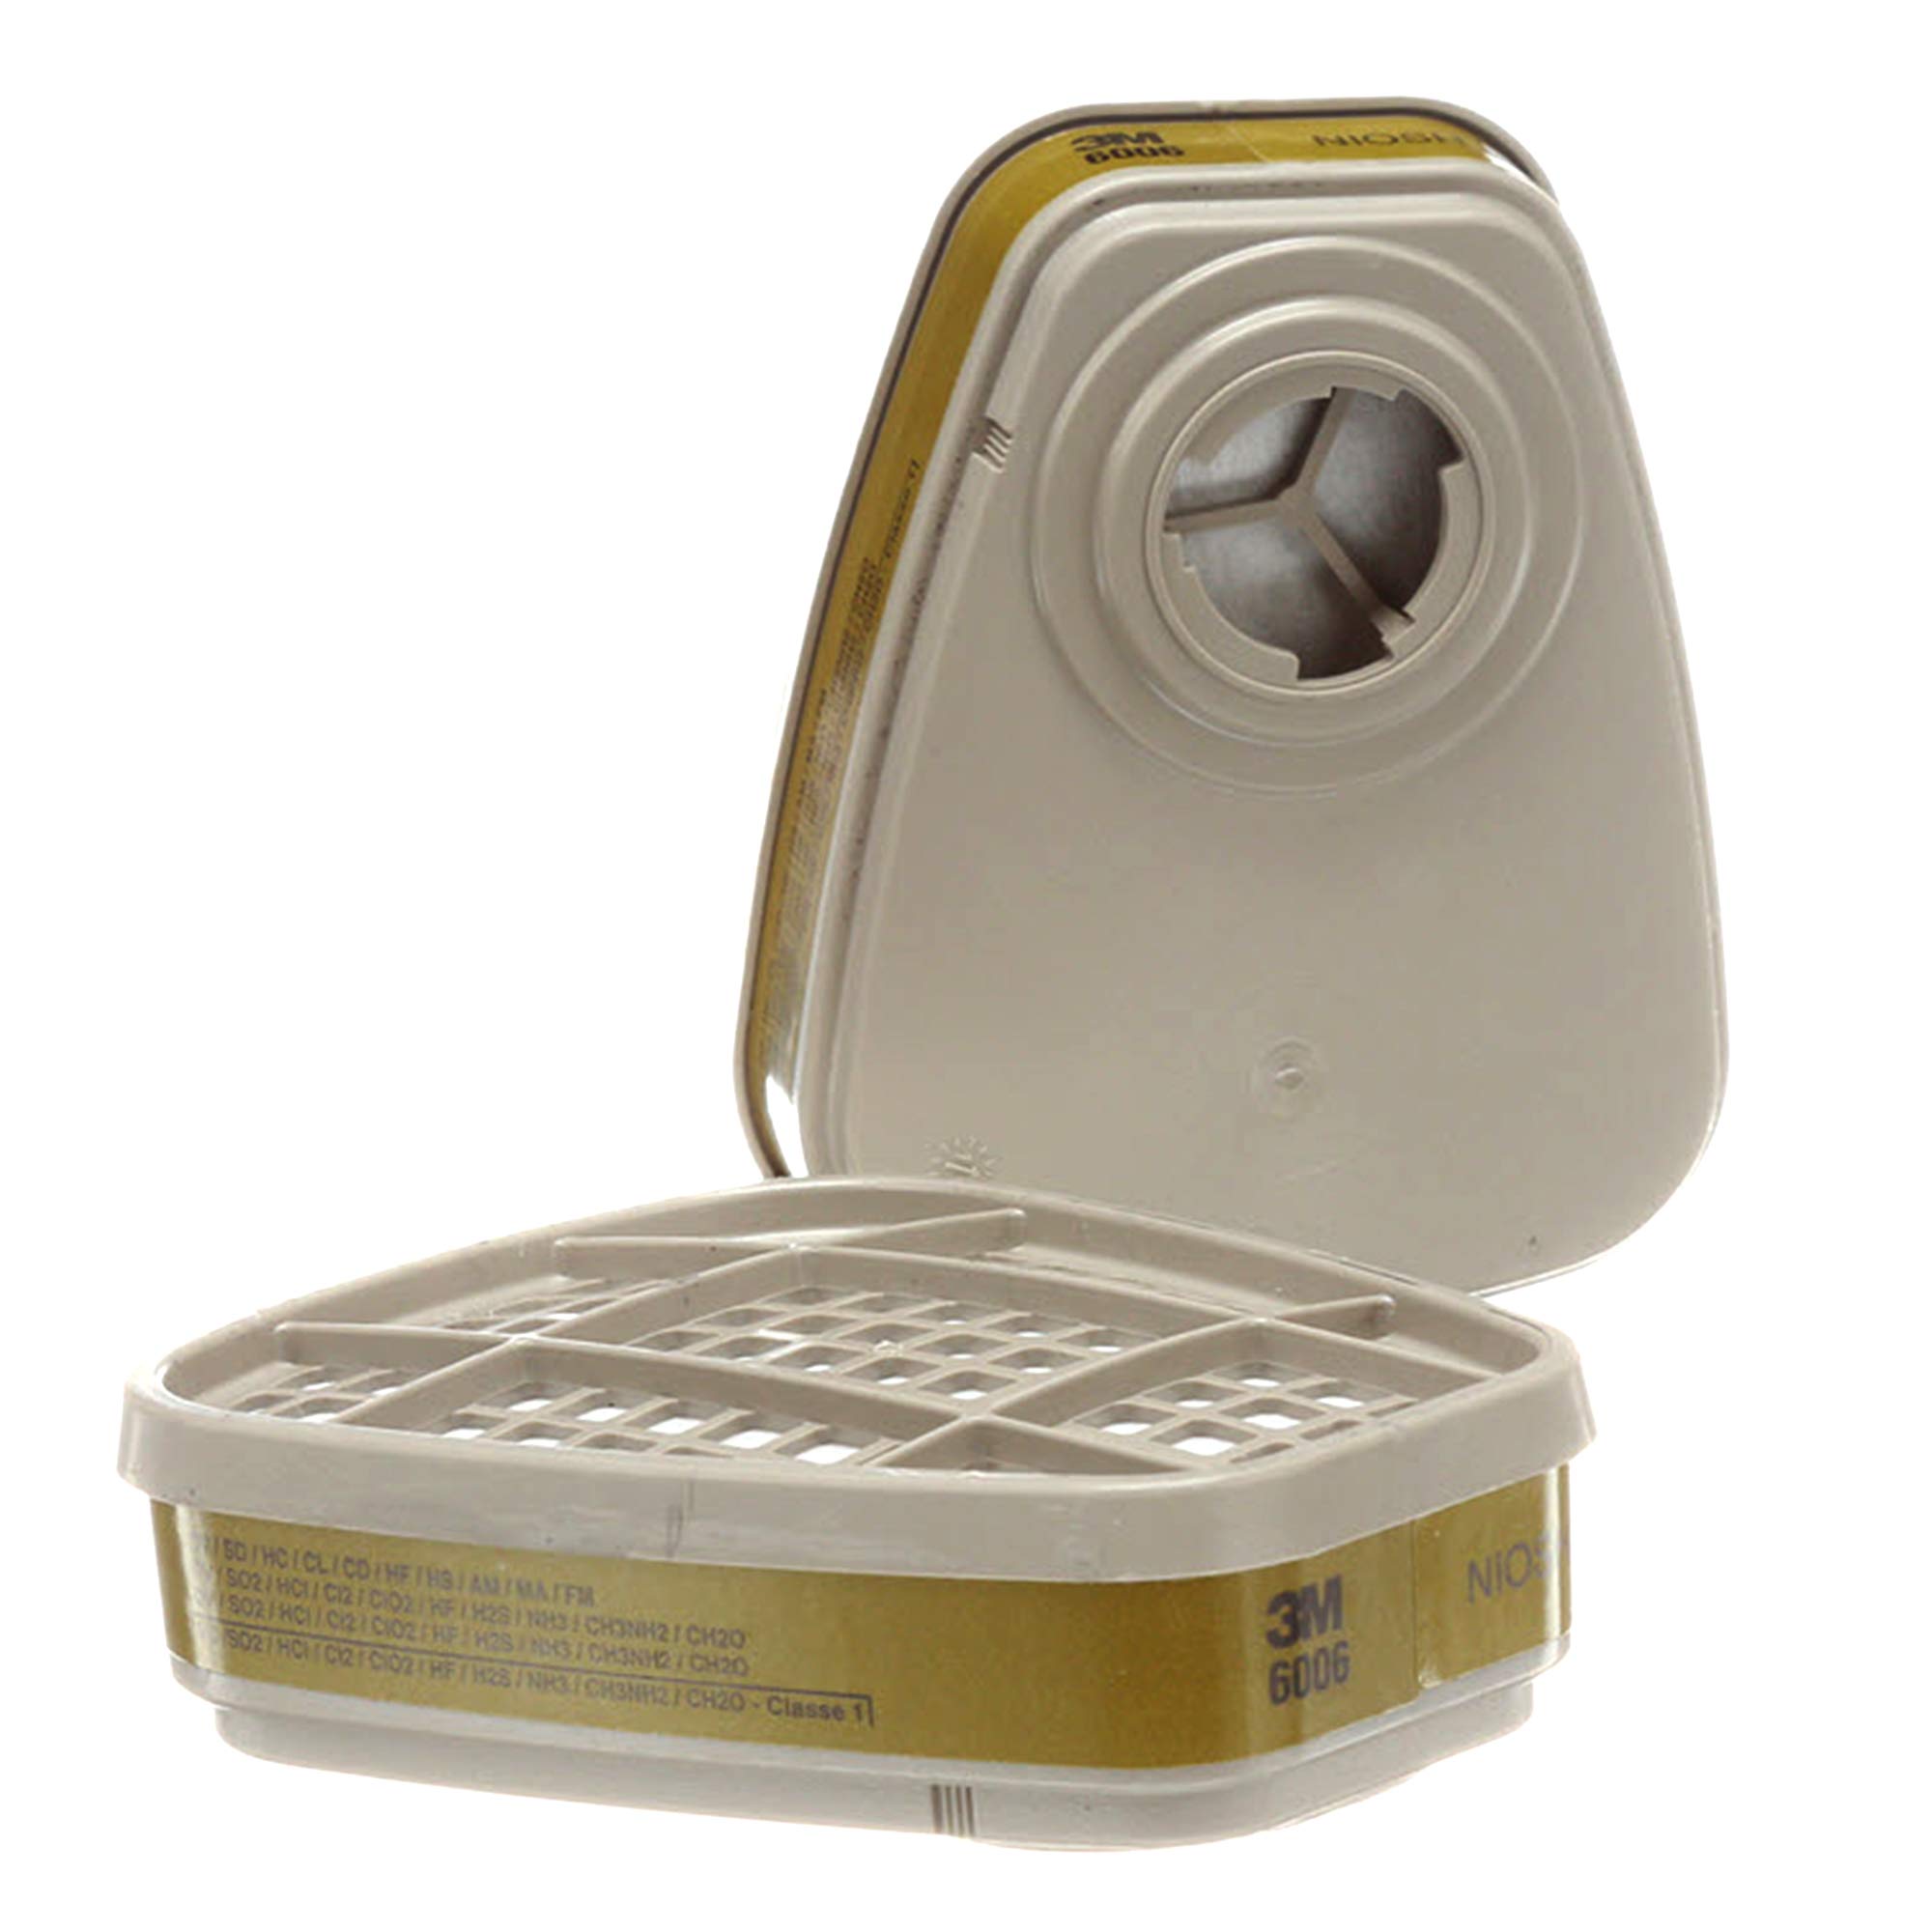 3M Respirator Cartridge 6006, 1 Pair, Helps Protect Against Organic Vapors, Acid Gases, Ammonia, Methylamine or Formaldehyde,Olive